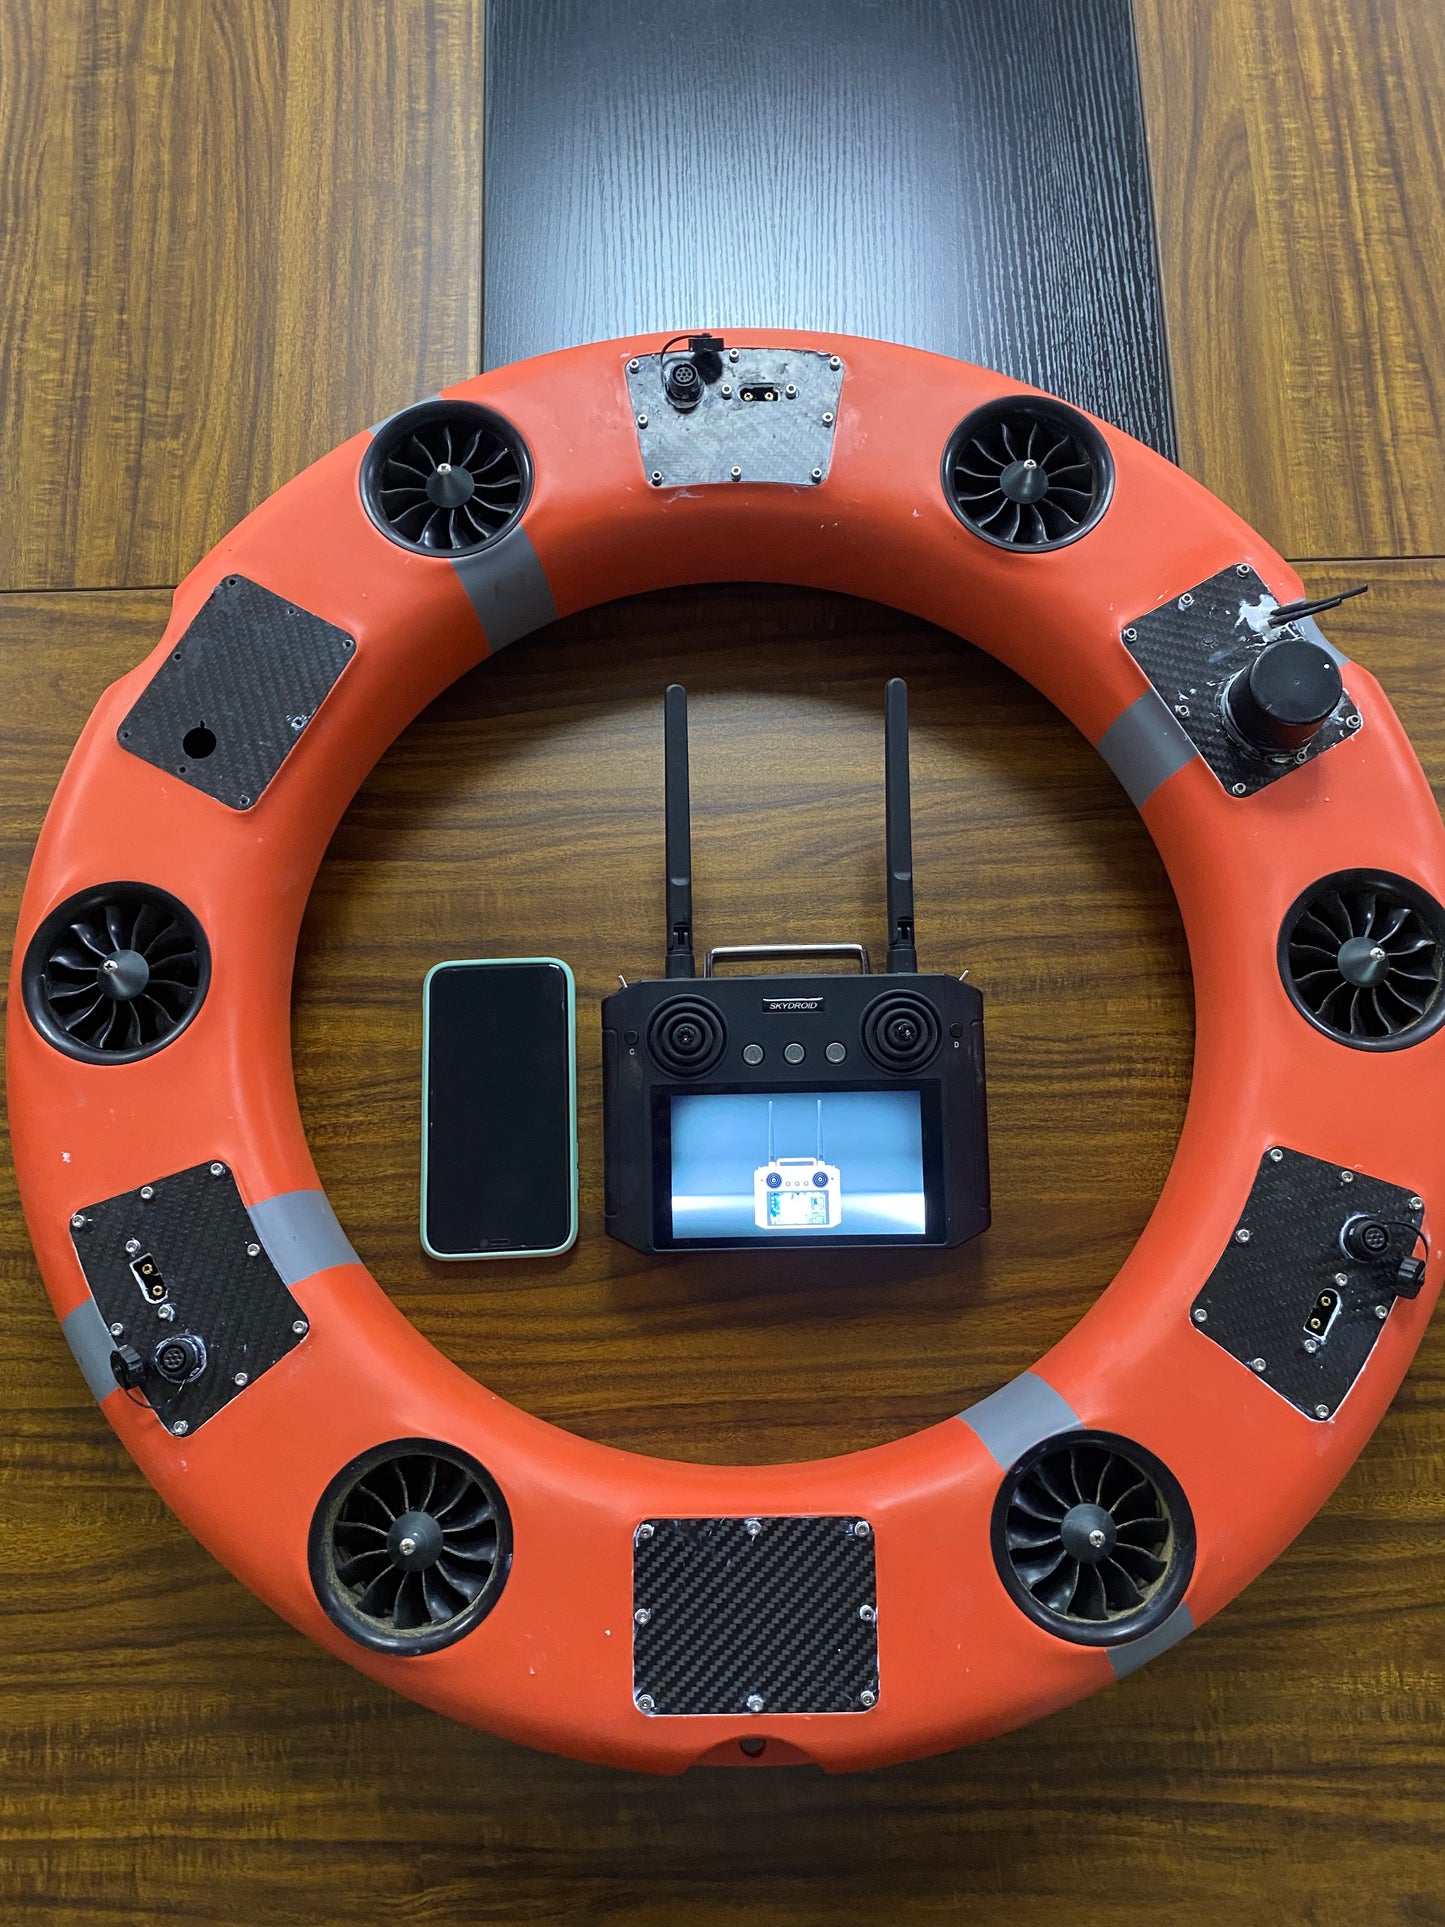 Water Buoy Float Lifesaving Drone Intelligent Remote Control Lifebuoy Rescue Smart Robot